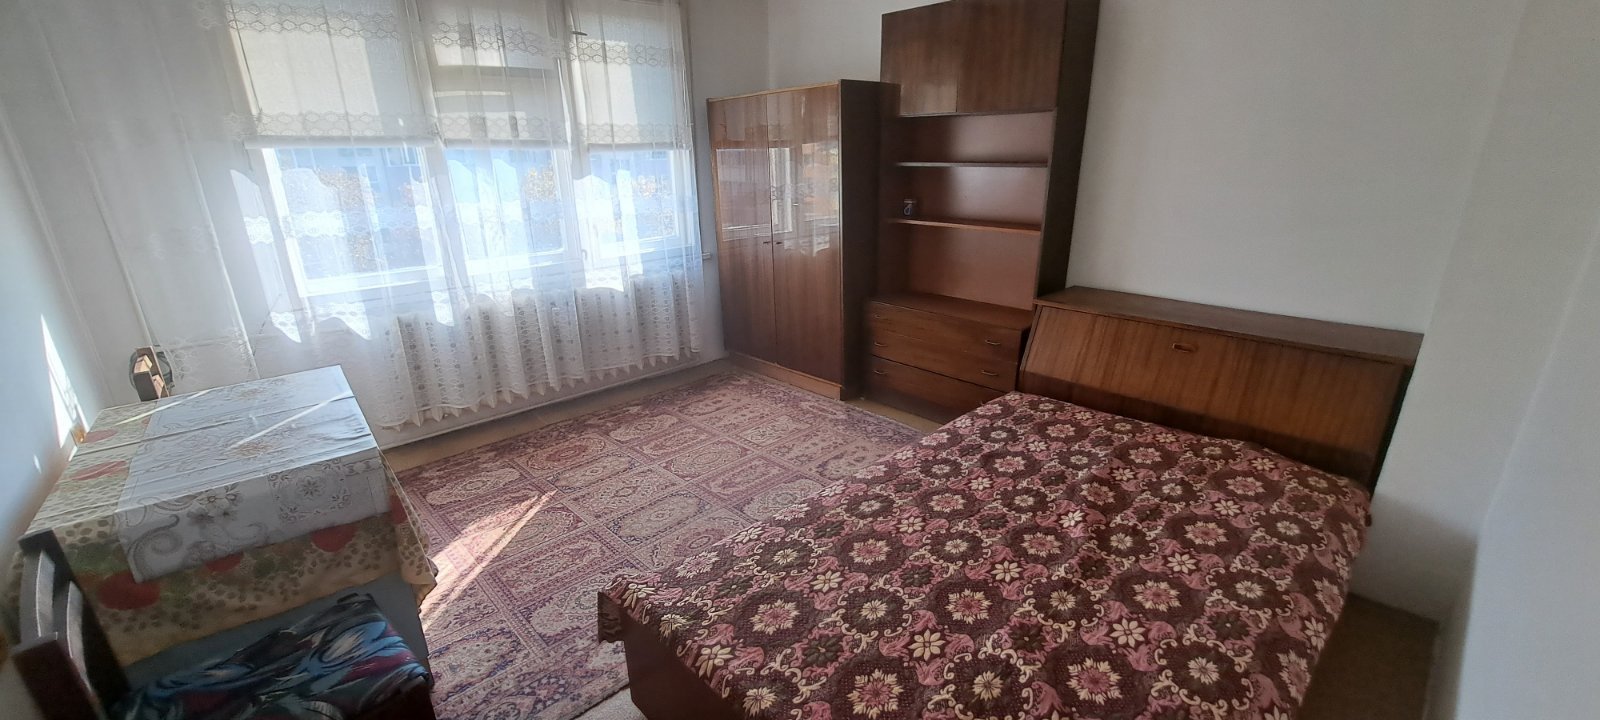 Едностаен апартамент  в  Русе за 300  лв - Едностаен обзаведен, ТЕЦ -